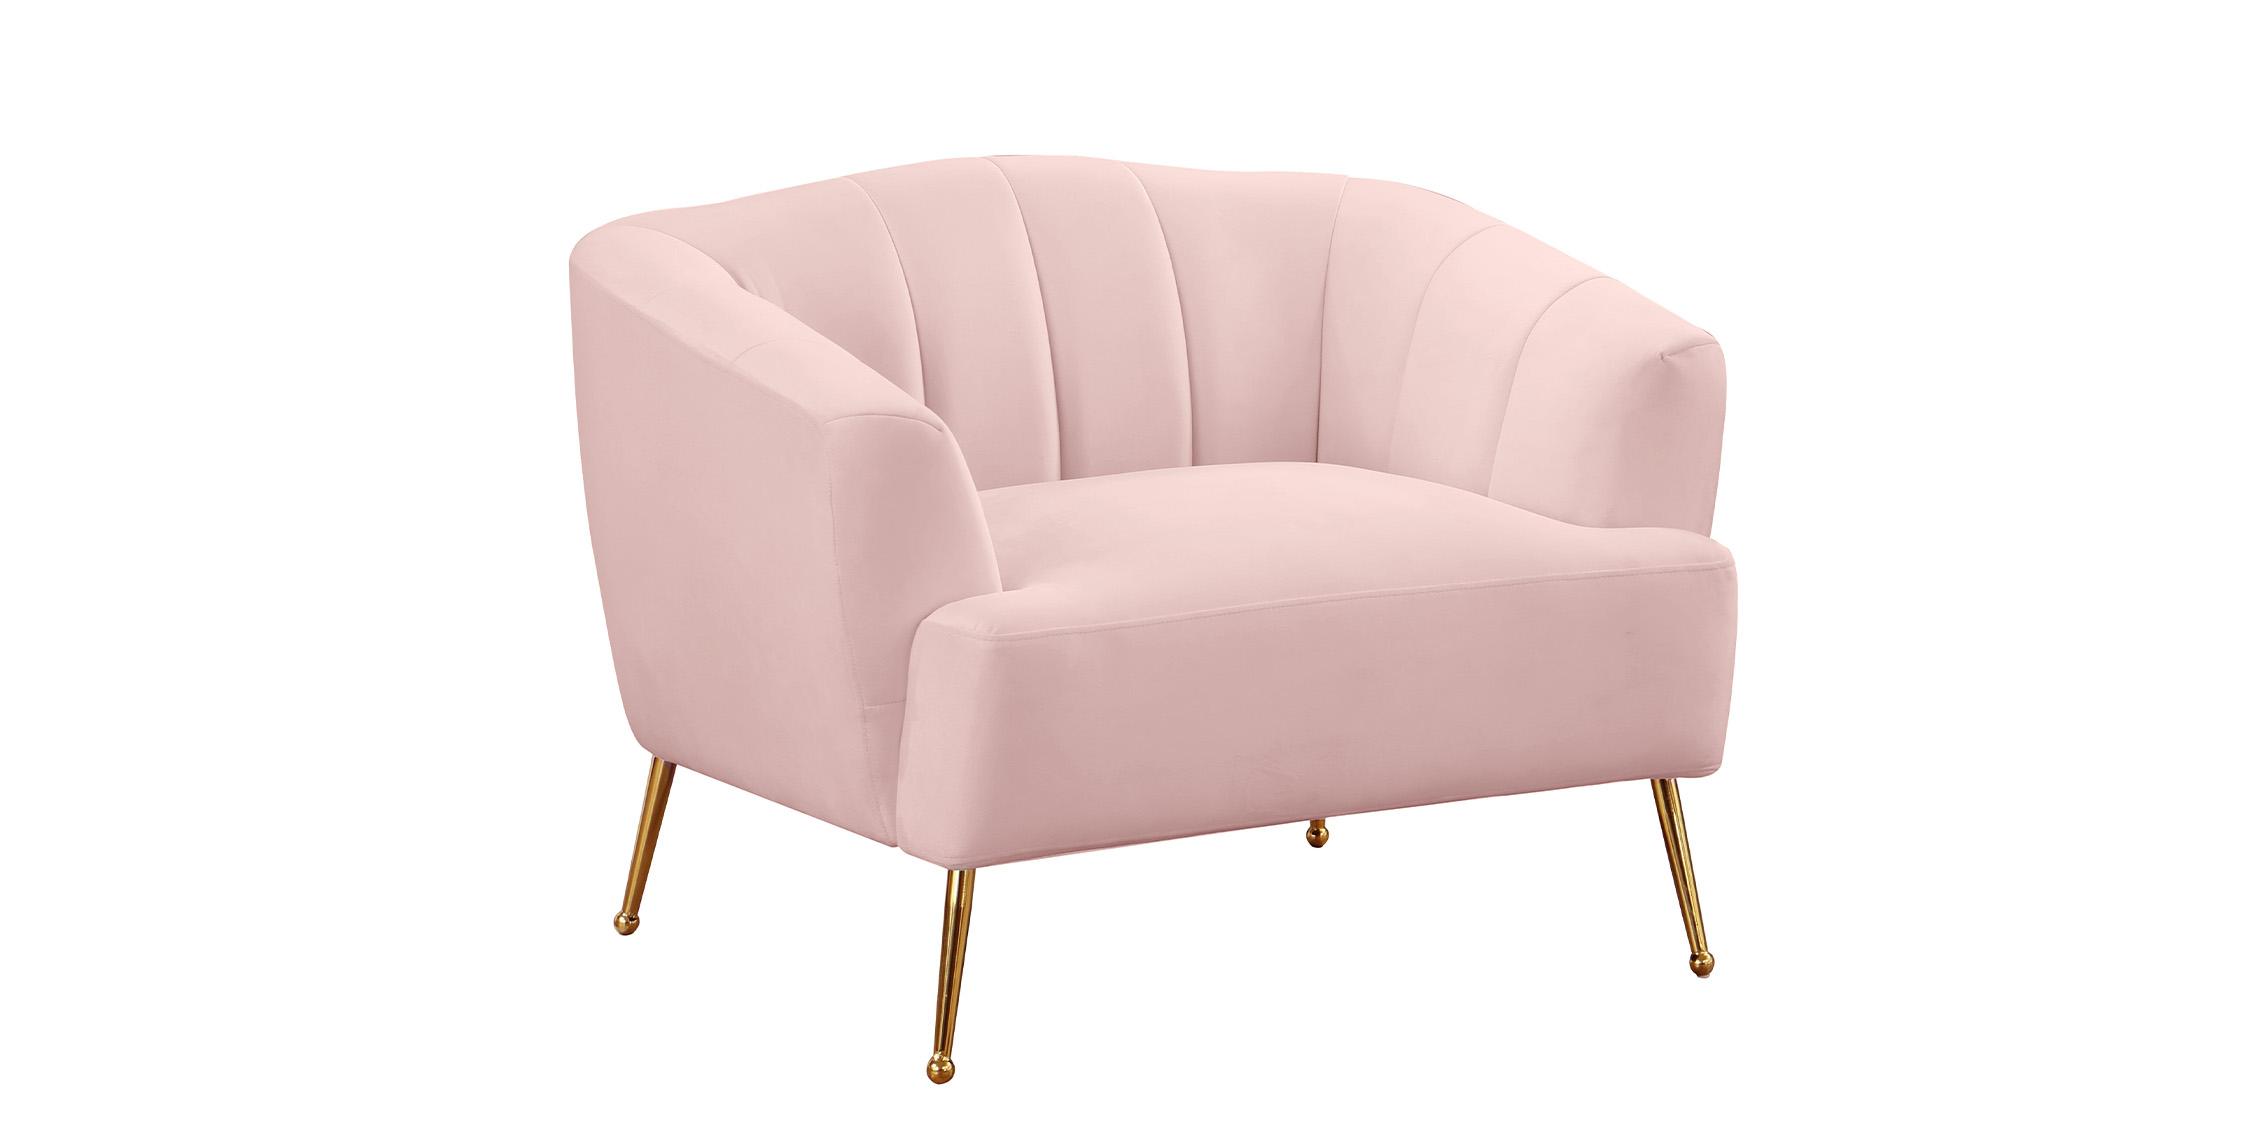 Contemporary, Modern Arm Chair TORI 657Pink-C 657Pink-C in Pink Velvet